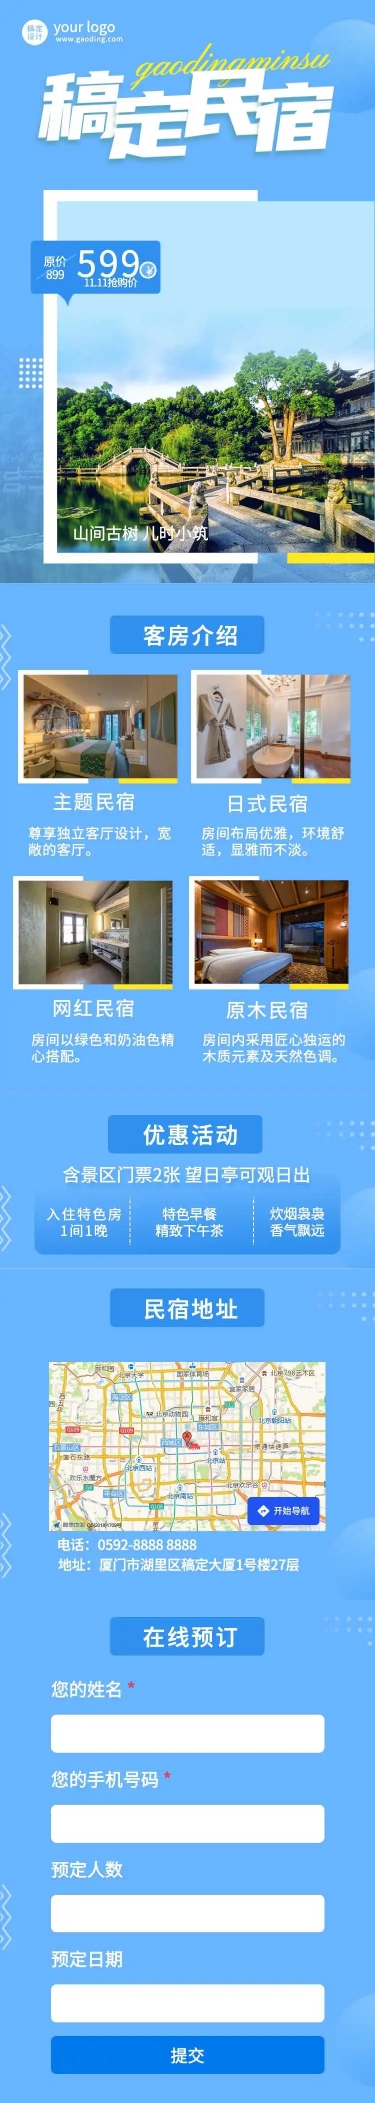 H5长页旅游双十一酒店民宿促销营销宣传